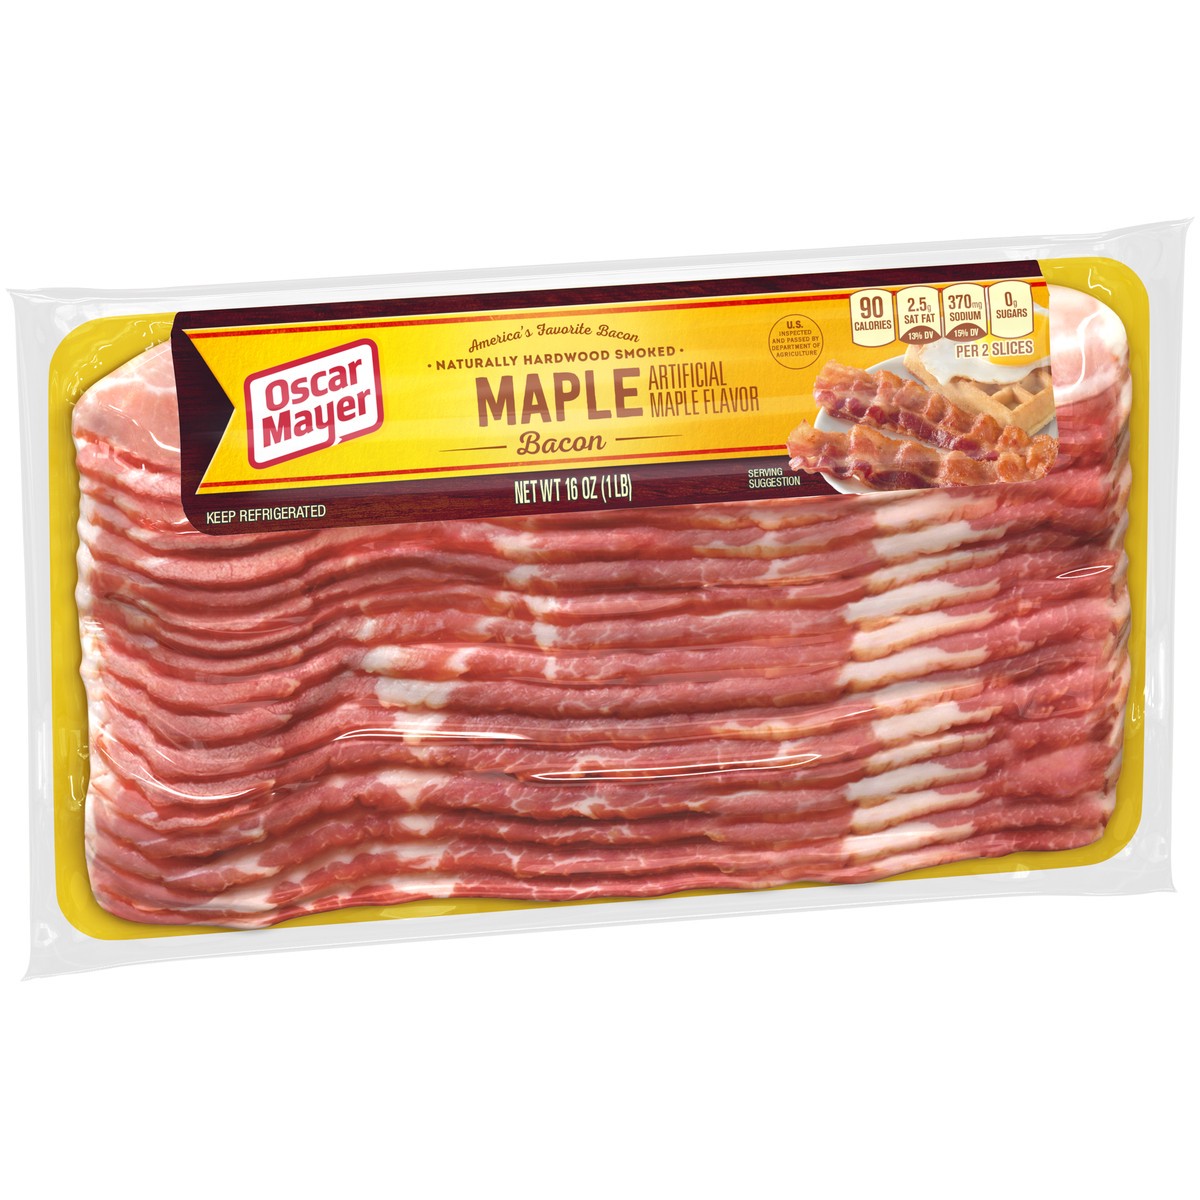 slide 5 of 8, Oscar Mayer Naturally Hardwood Smoked Maple Bacon, 16 oz Pack, 15-17 slices, 16 oz